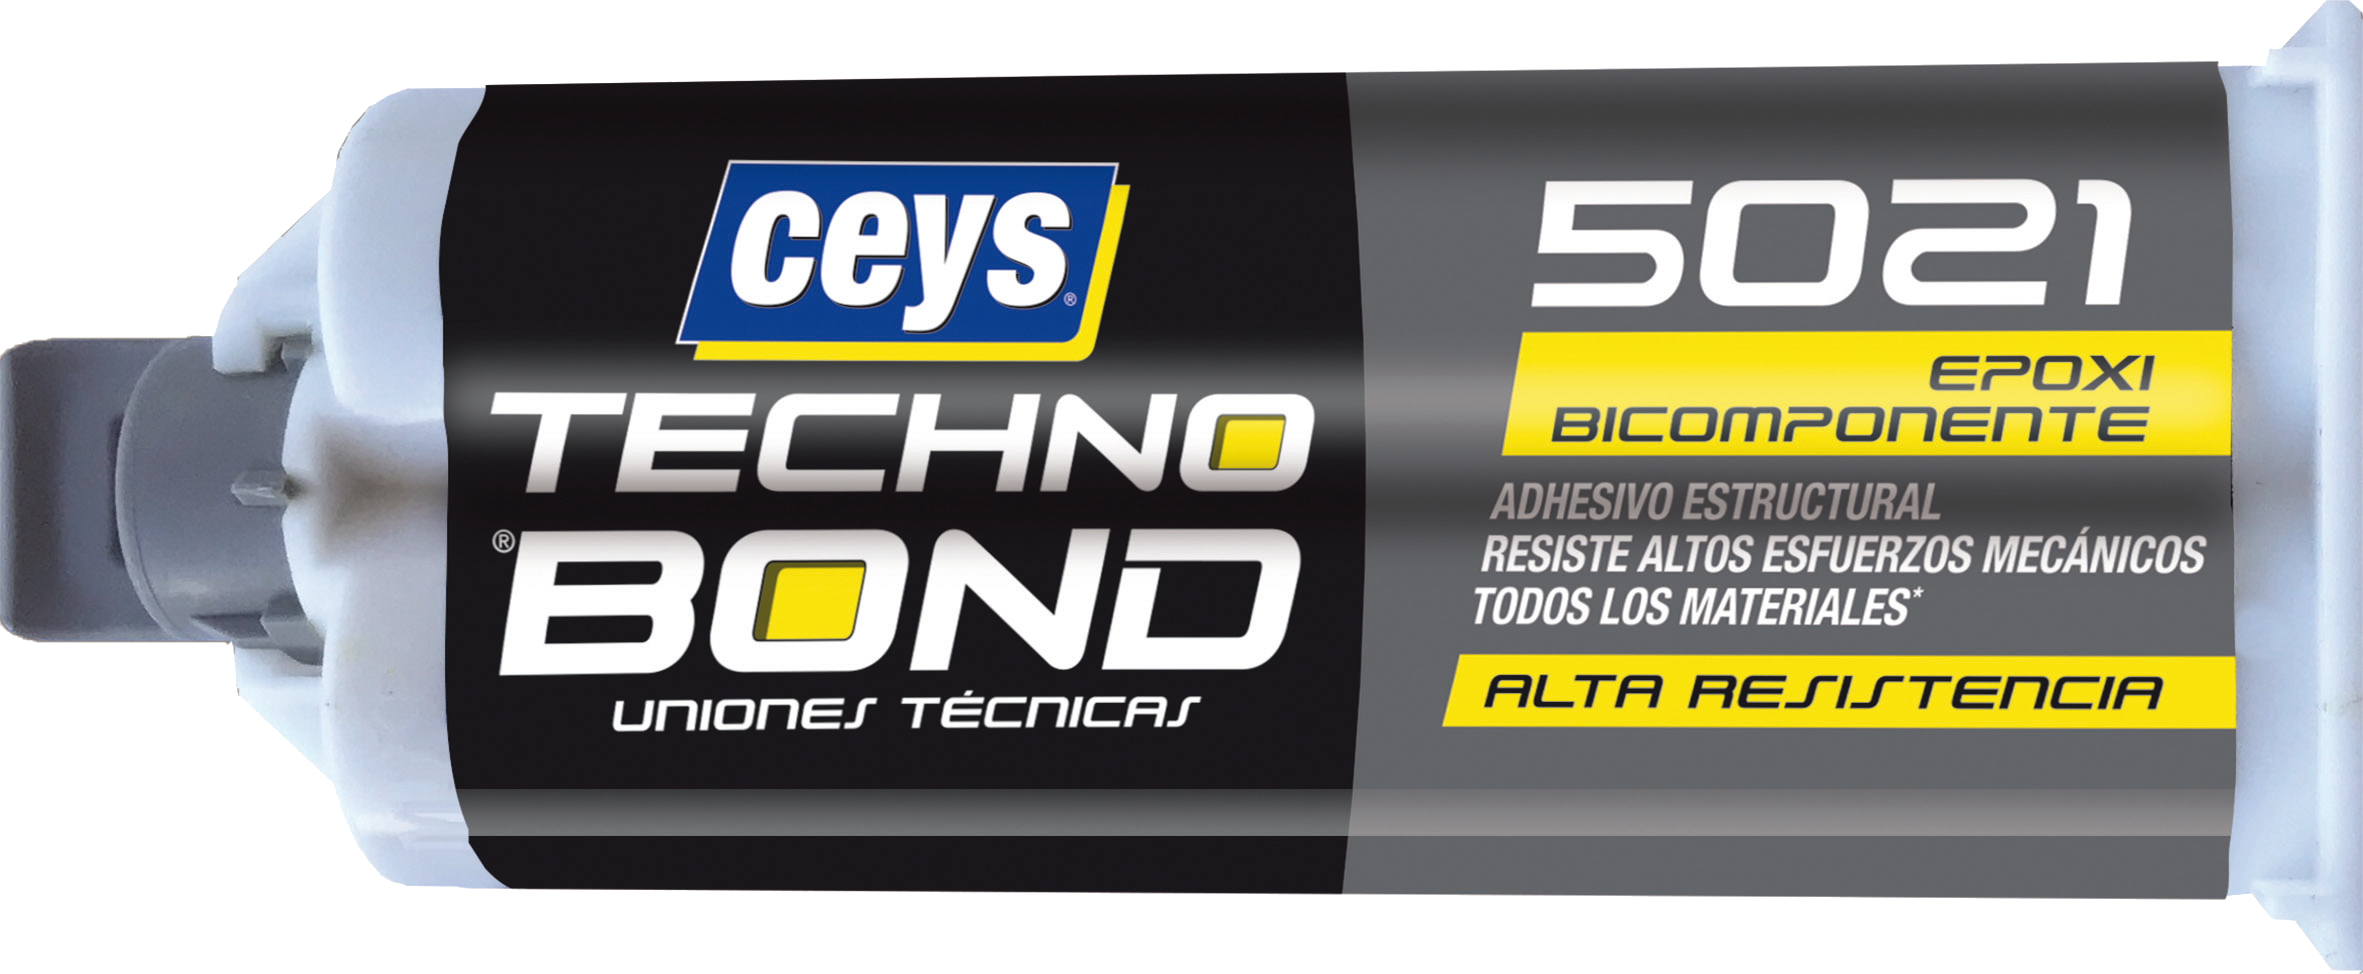 Technobond 5021 (Cartucho de 50 ml.)